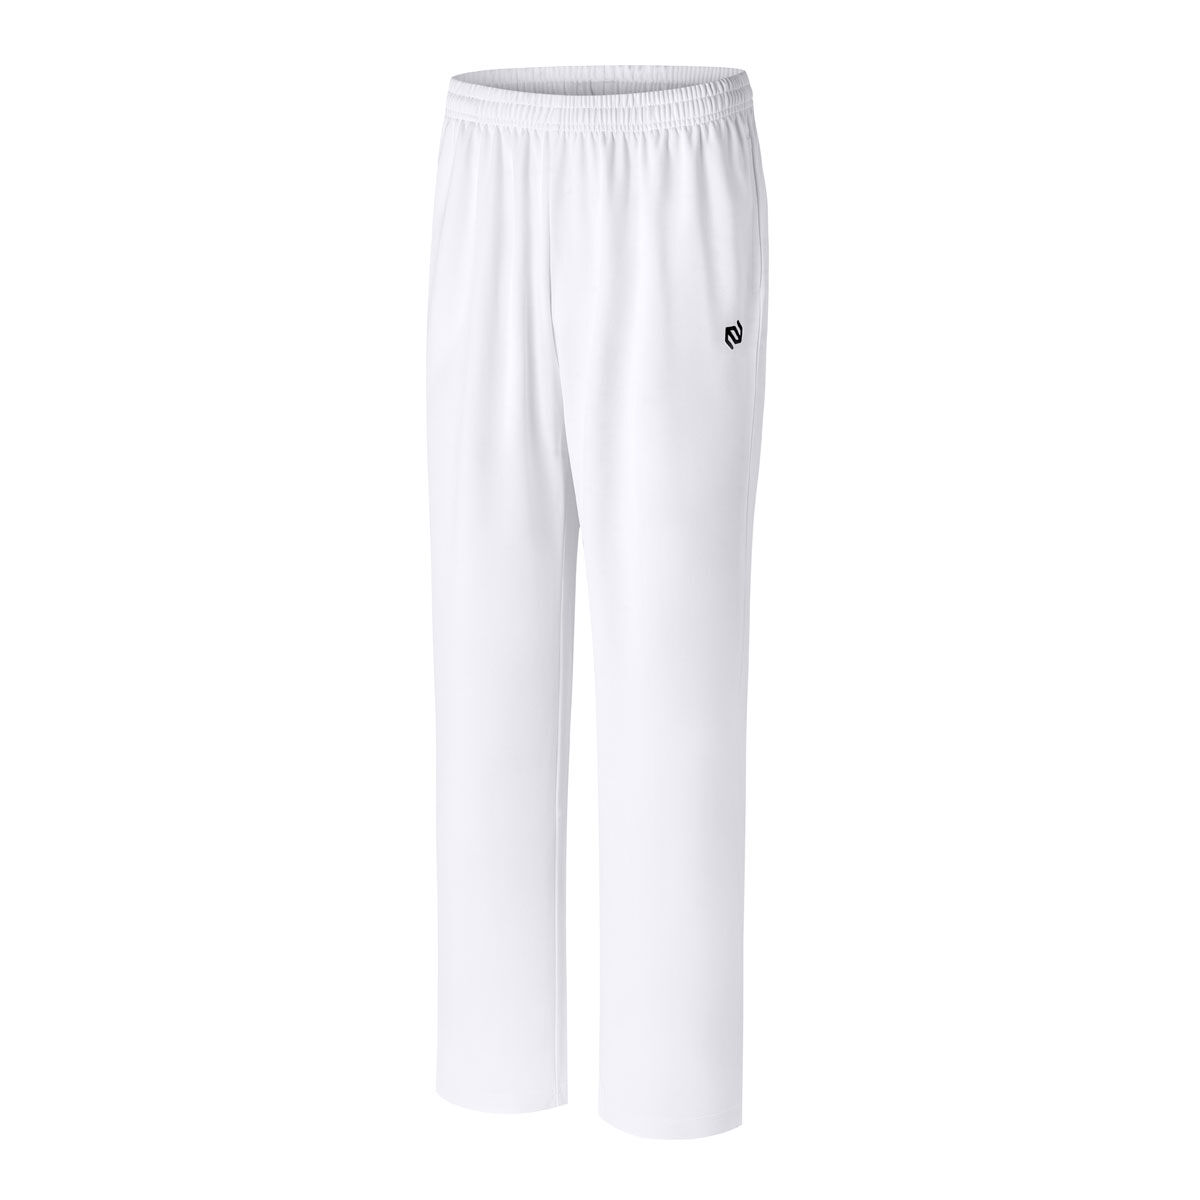 Triumph MensBoys Custom Design Cricket Pant White Size XSmall   Amazonin Fashion